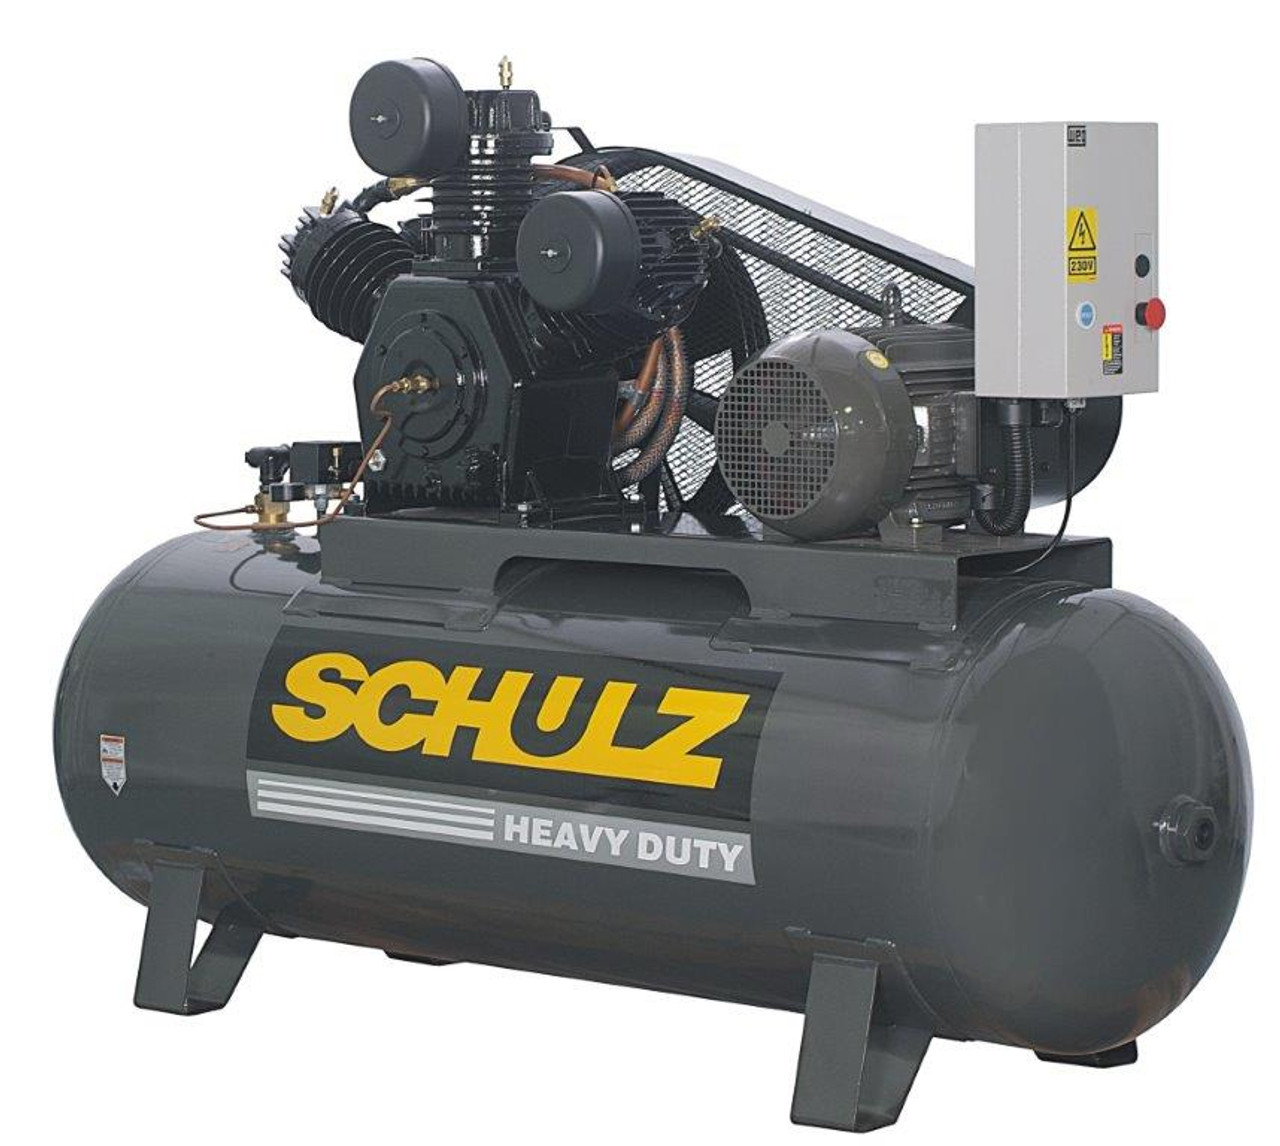 Schulz 15120HW60X-3 15 HP 208-230 Volt 3 Phase 60 CFM 120 Gallon Air Compressor